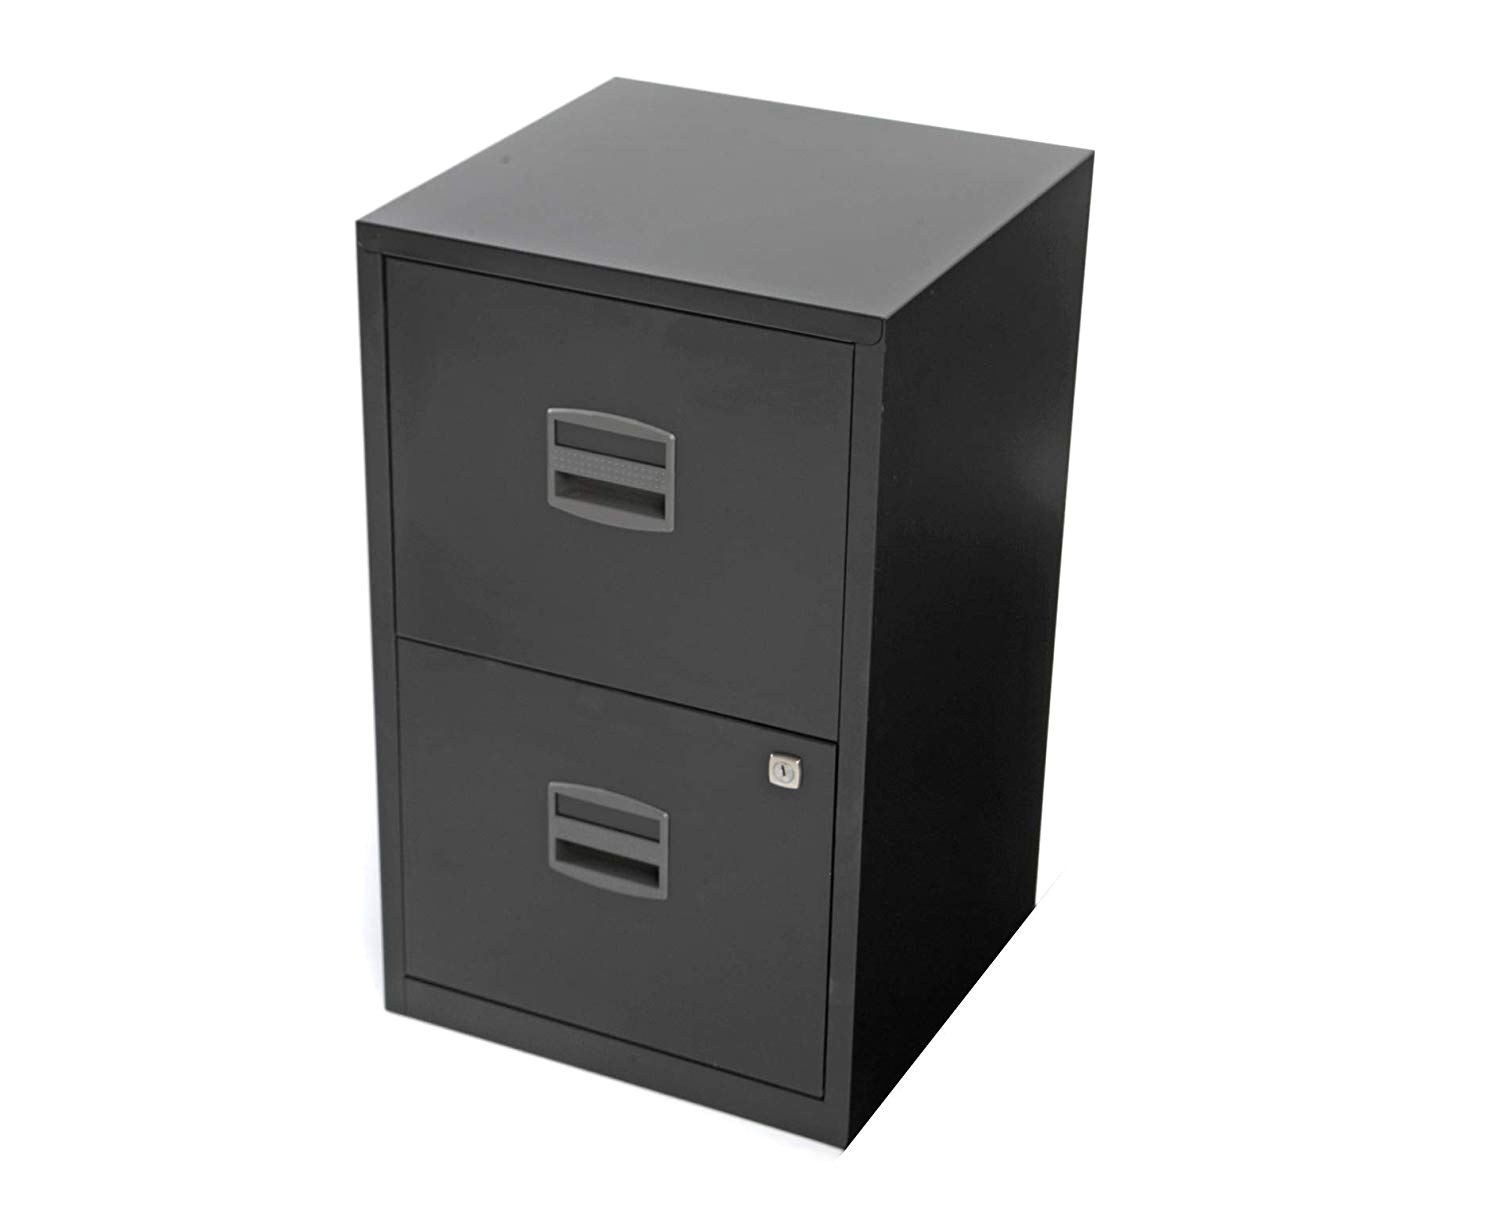 bisley steel 2 drawer filing cabinet black amazon co uk kitchen home